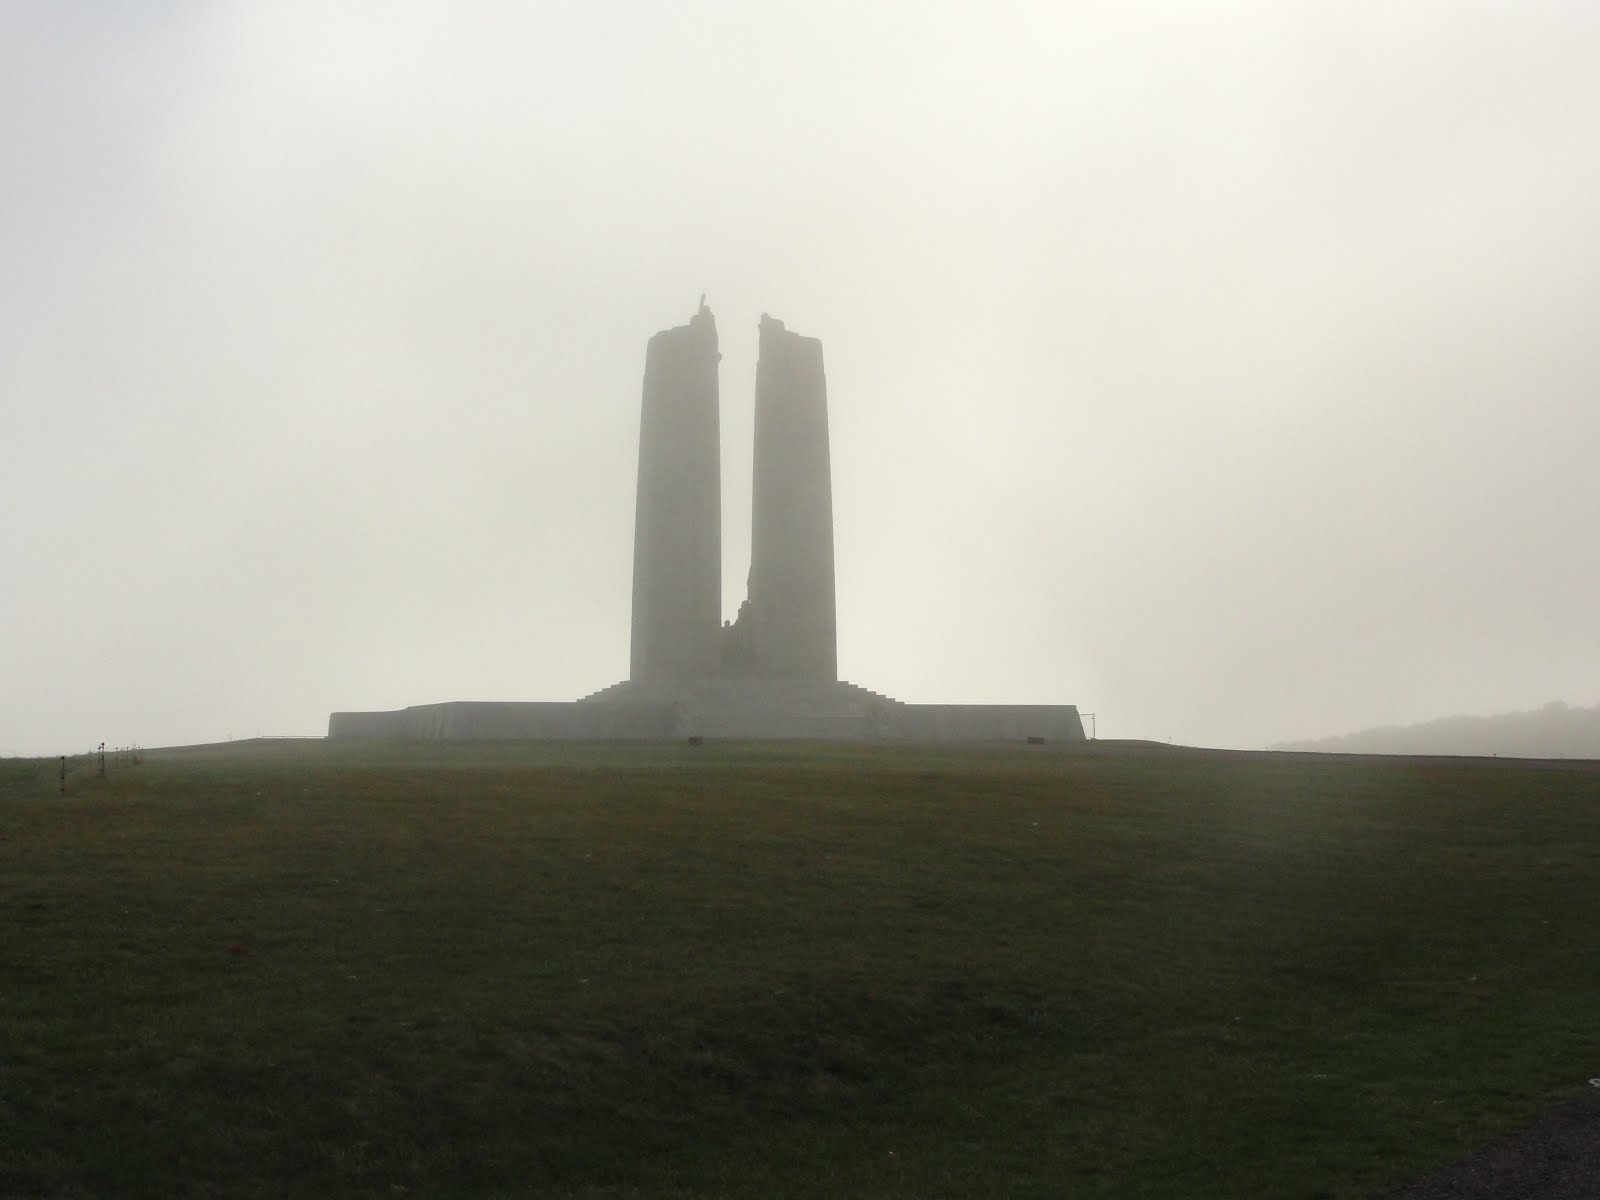 The Vimy Ridge Memorial